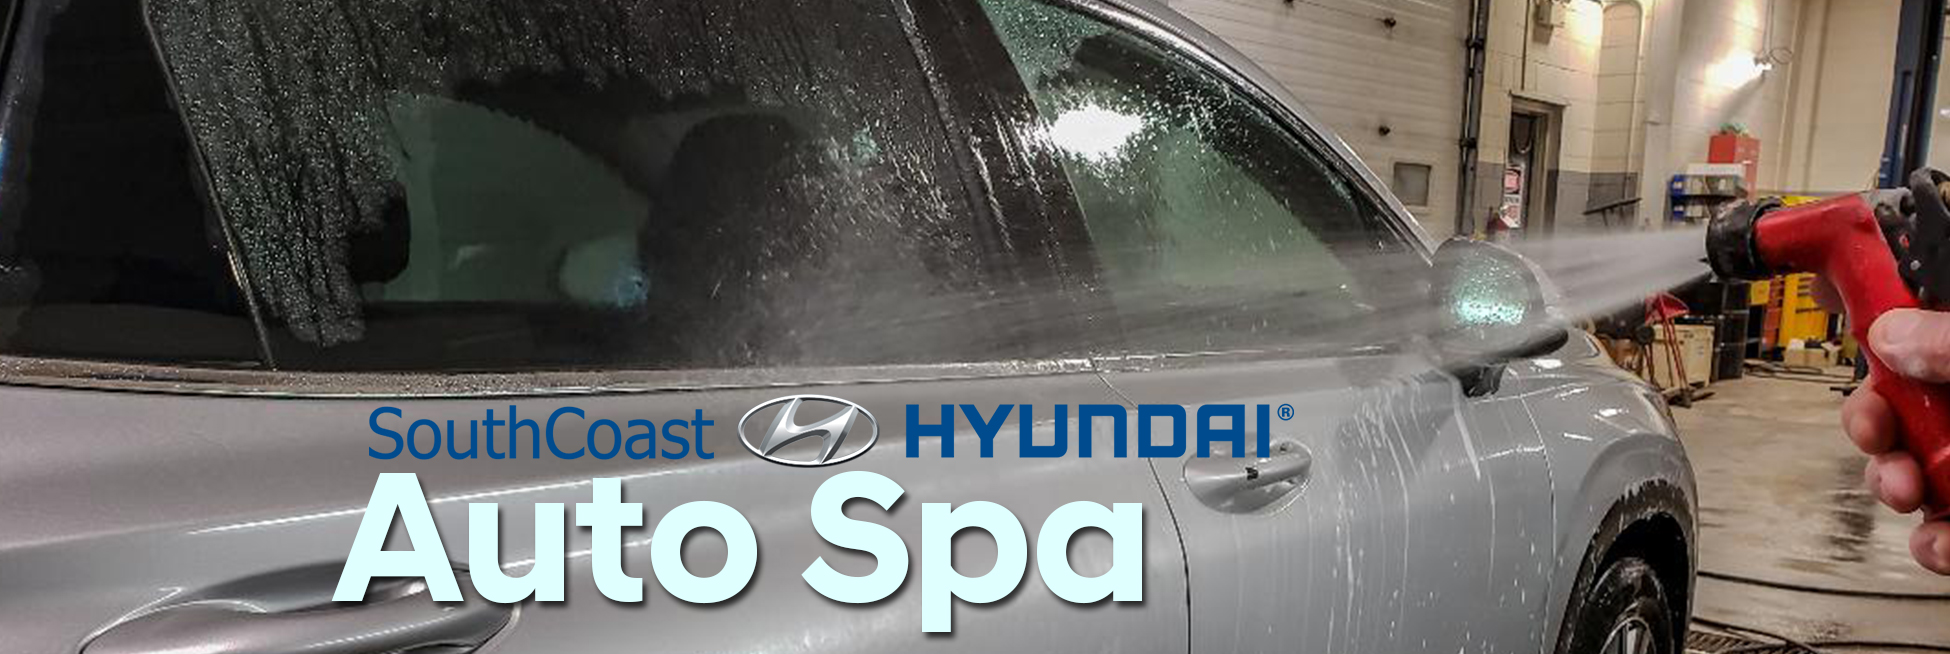 Southcoast Hyundai - broken image